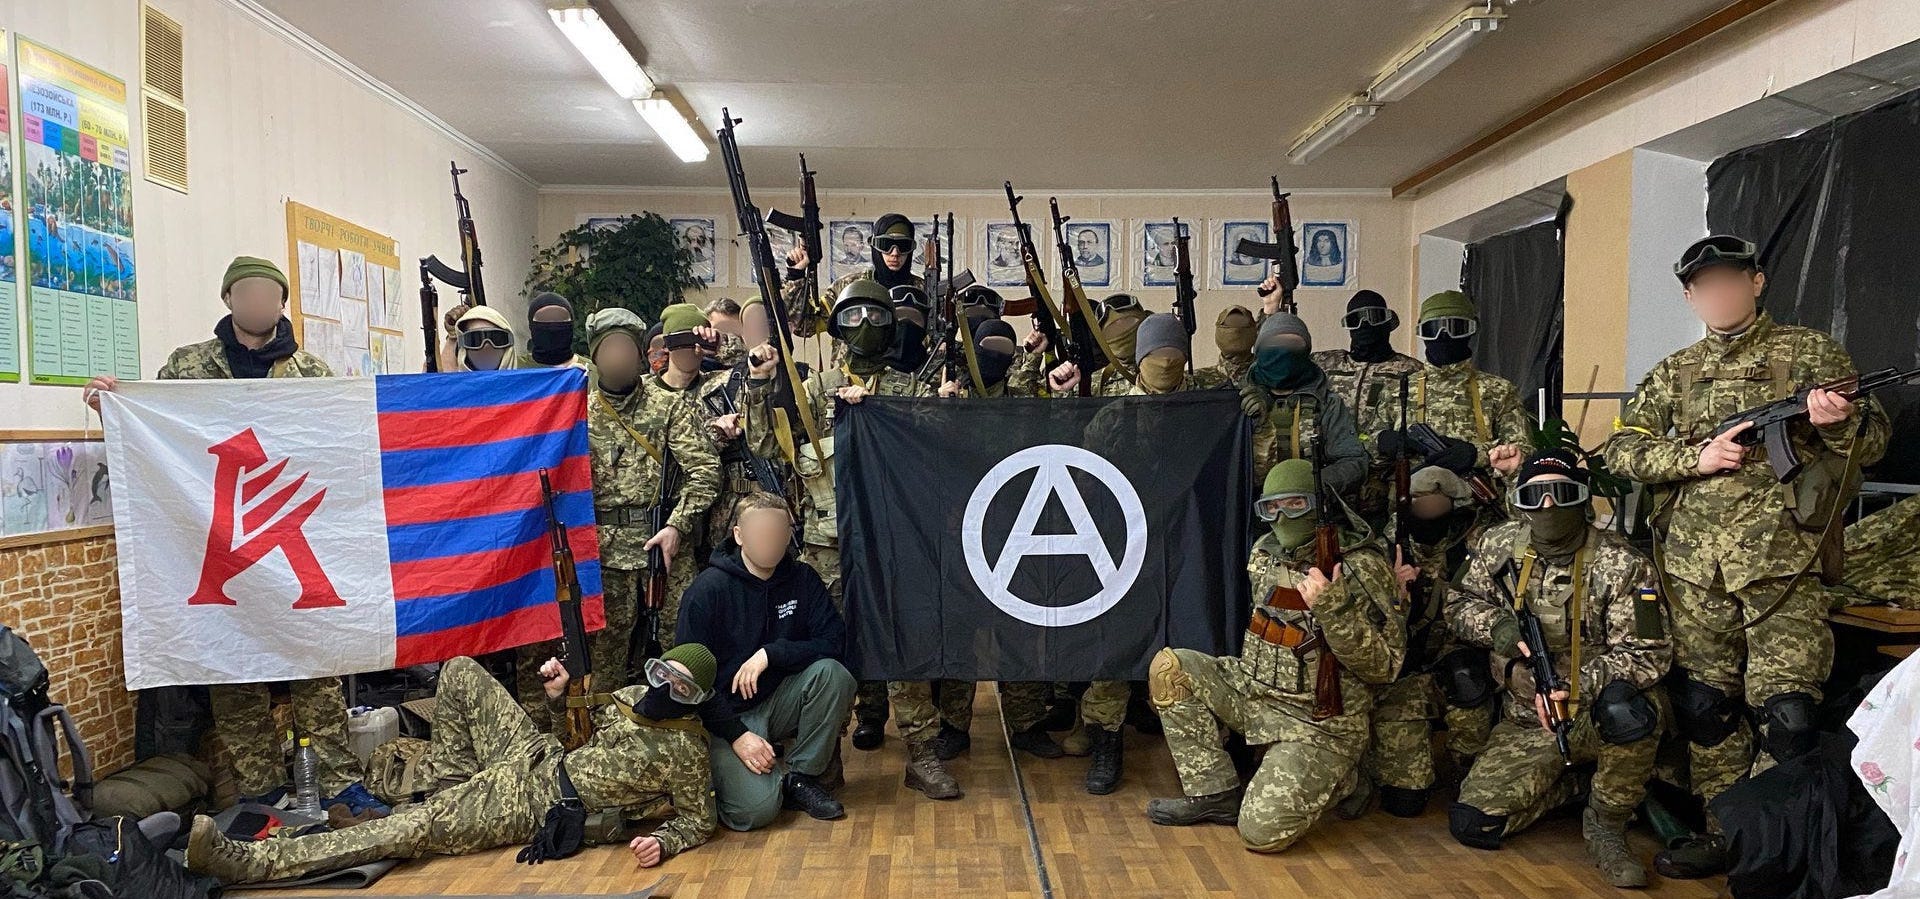 Ukrainian anarchists